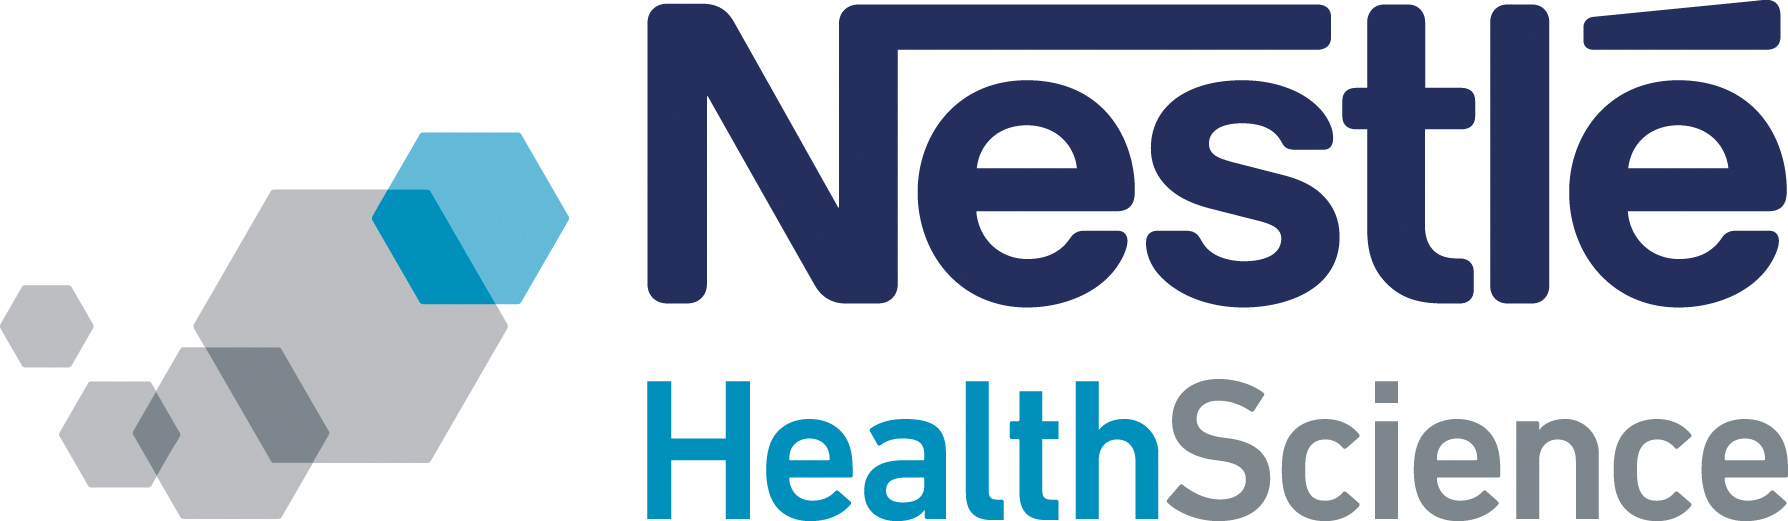 HSIAS Member - Nestlé Health Science